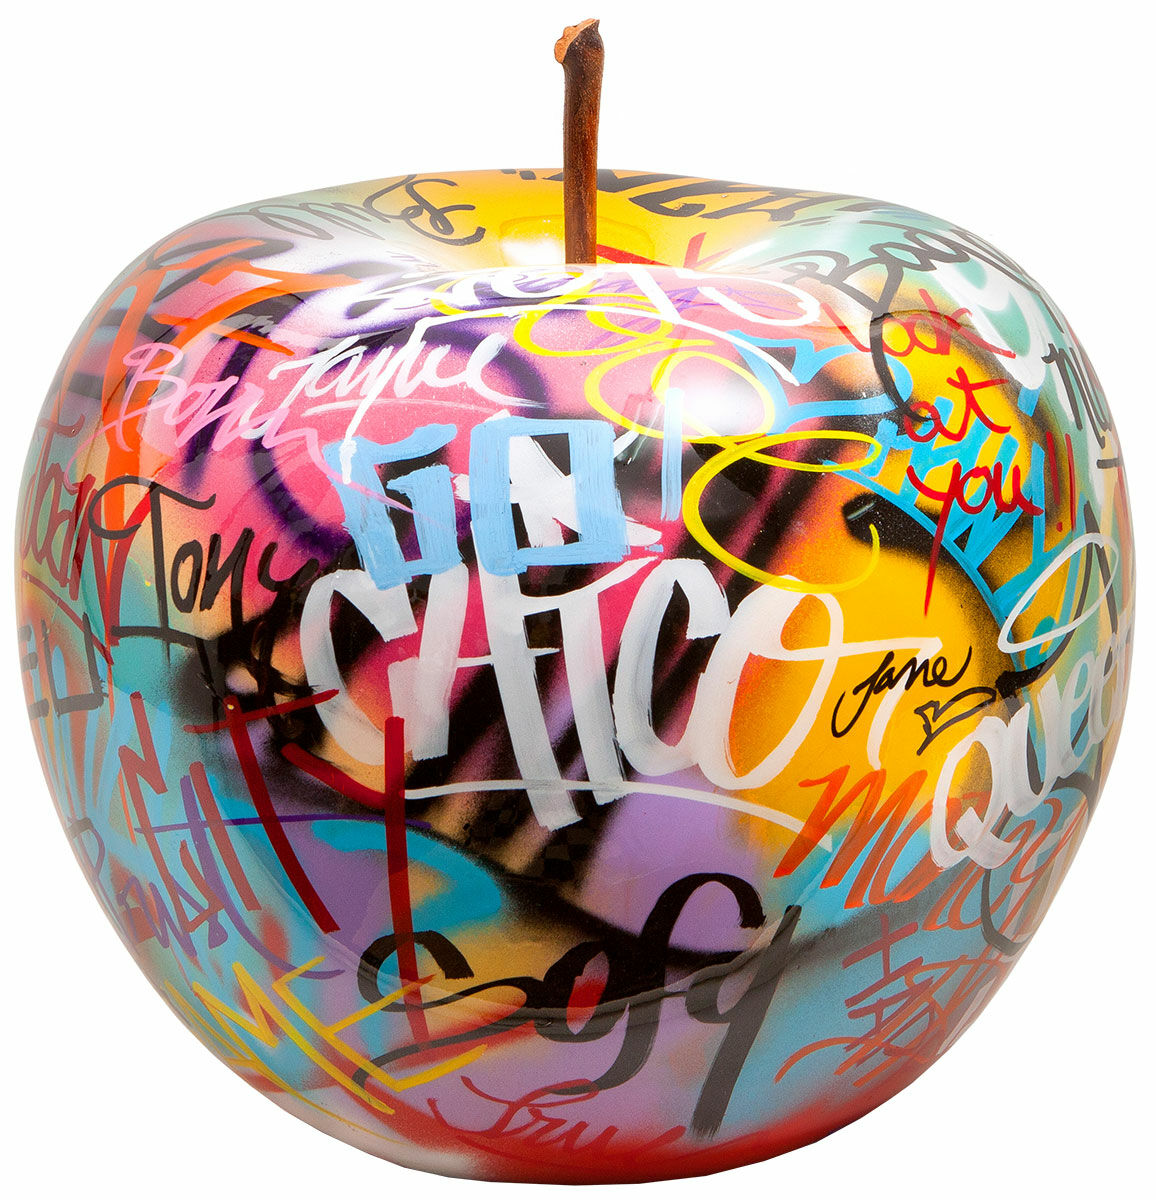 Keramikobjekt "Apfel Graffiti" von Bruno